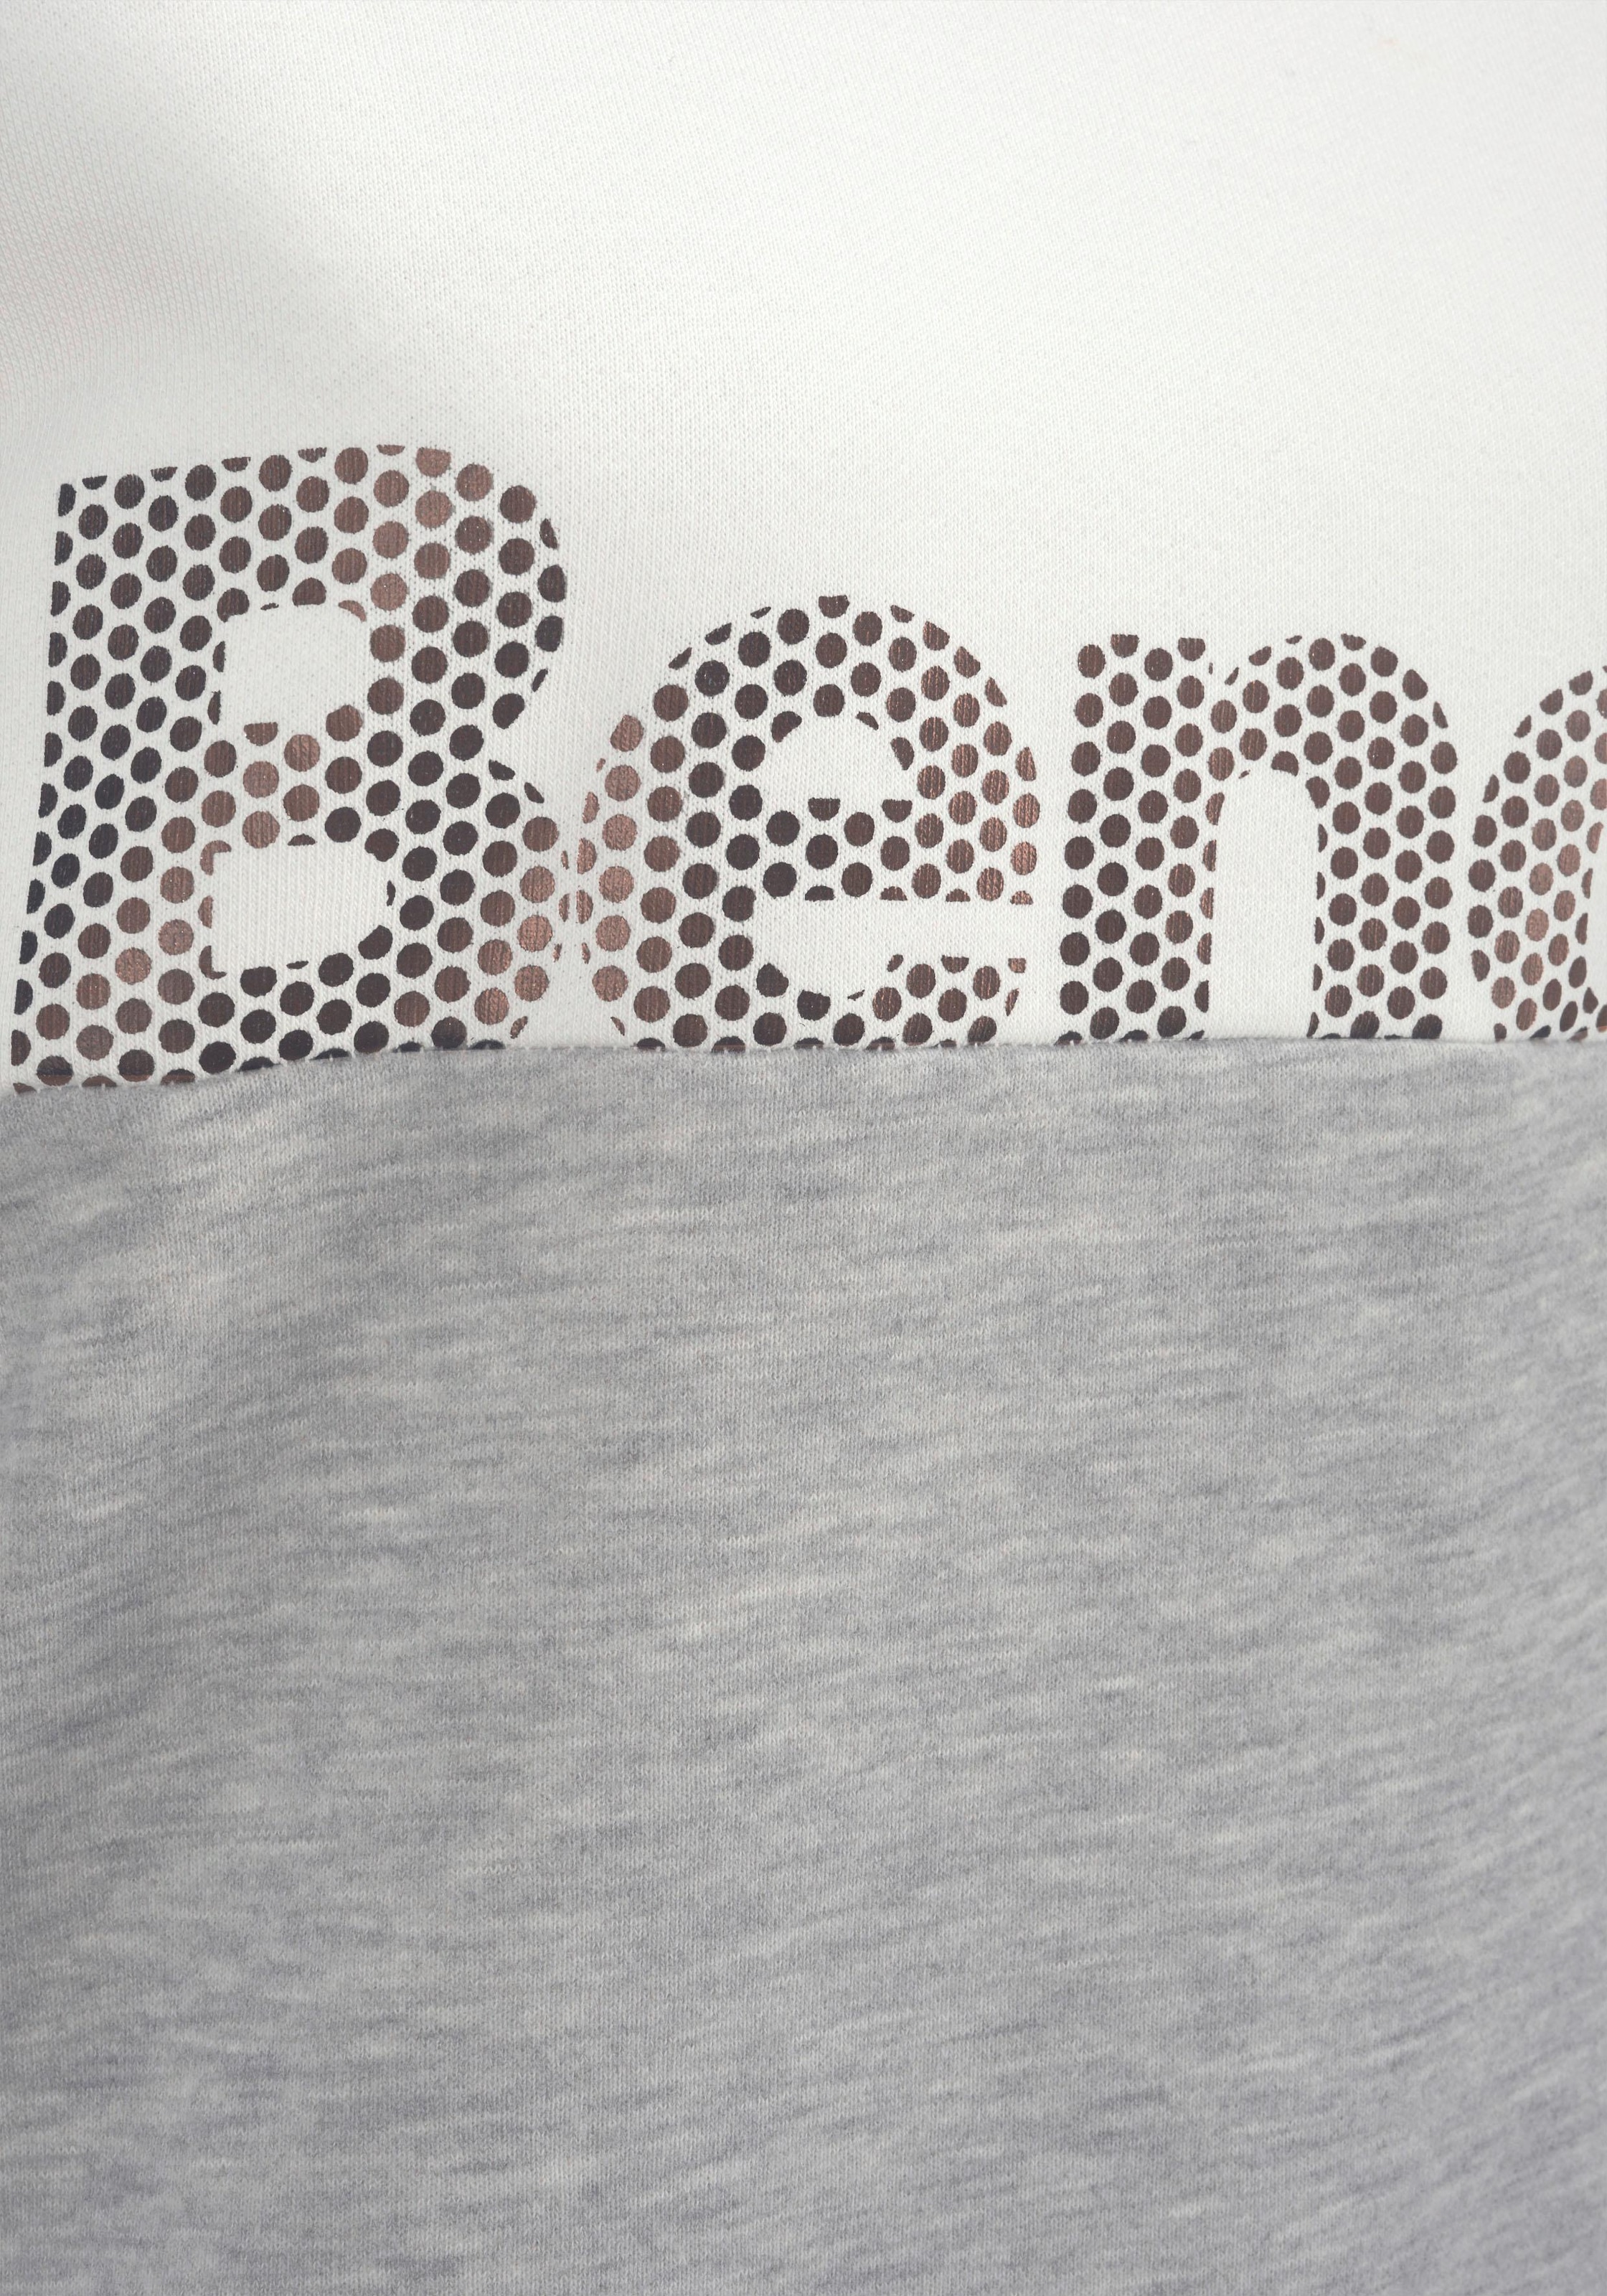 Bench. Sweatshirt, im Colorblocking Design, Loungewear, Loungeanzug